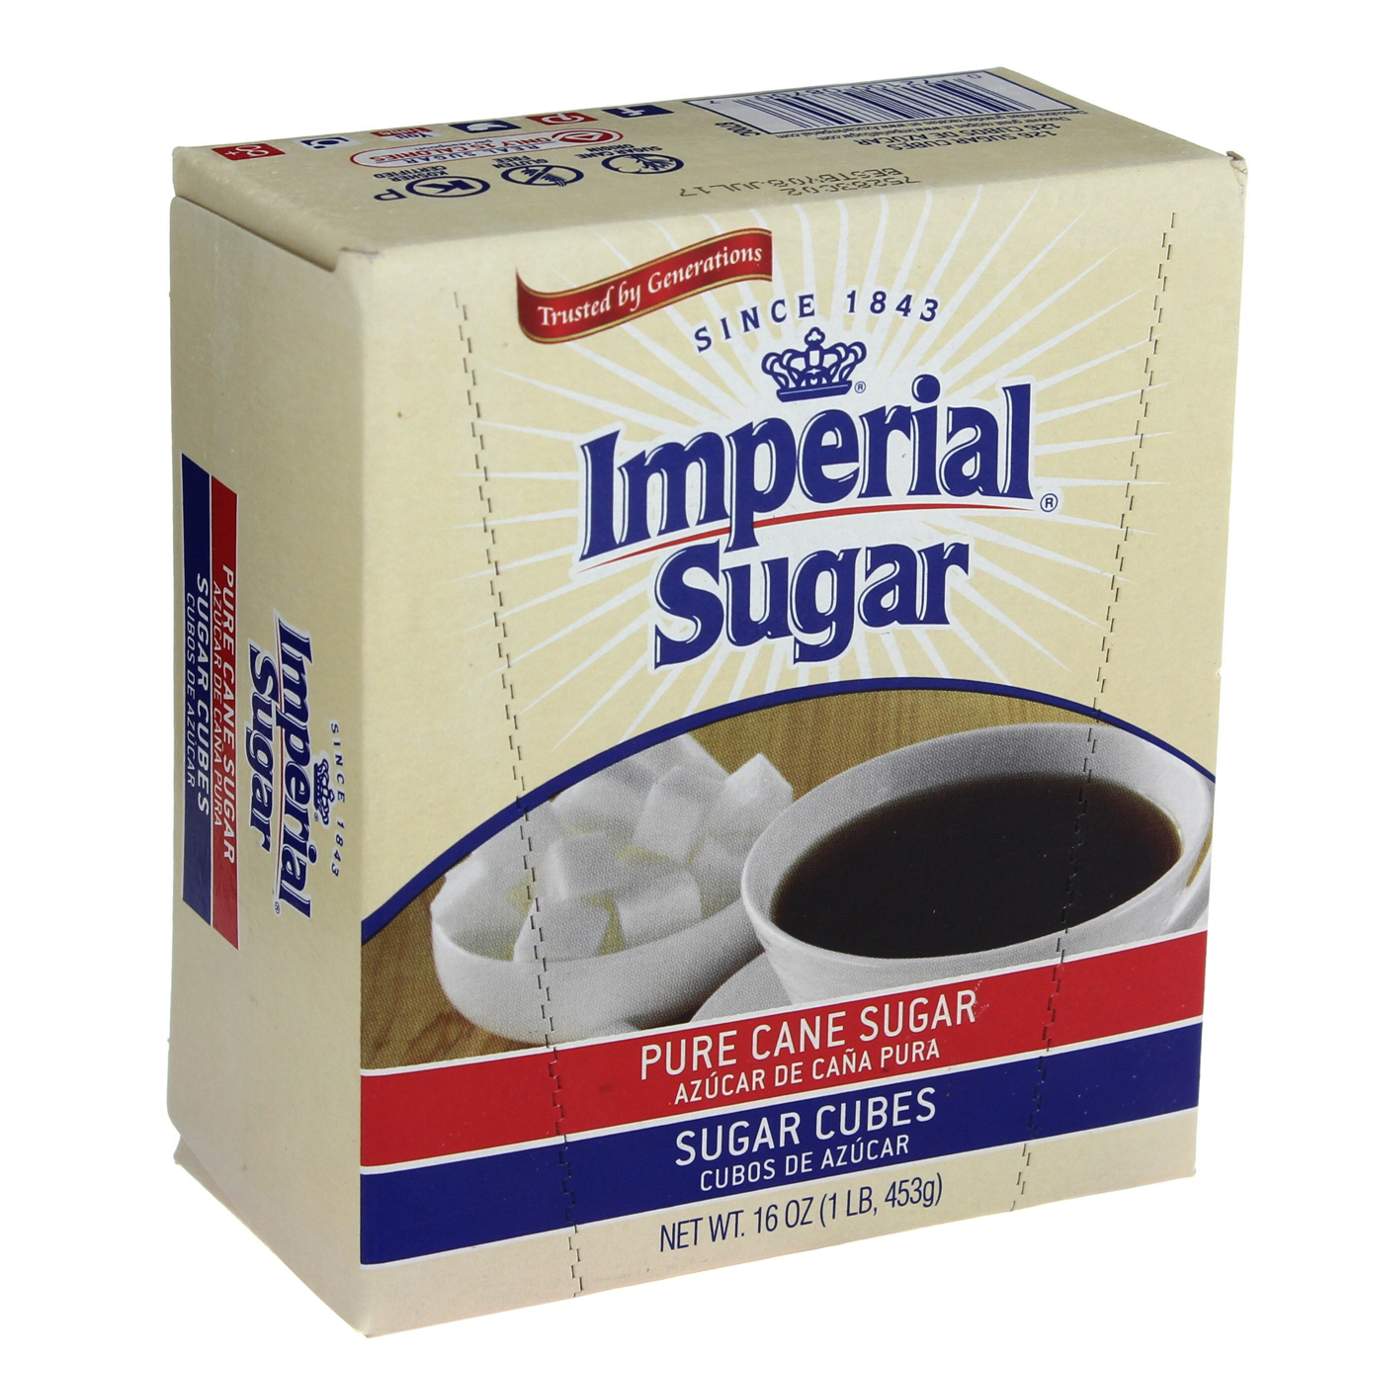 Imperial Sugar Pure Cane Sugar Cubes; image 1 of 2